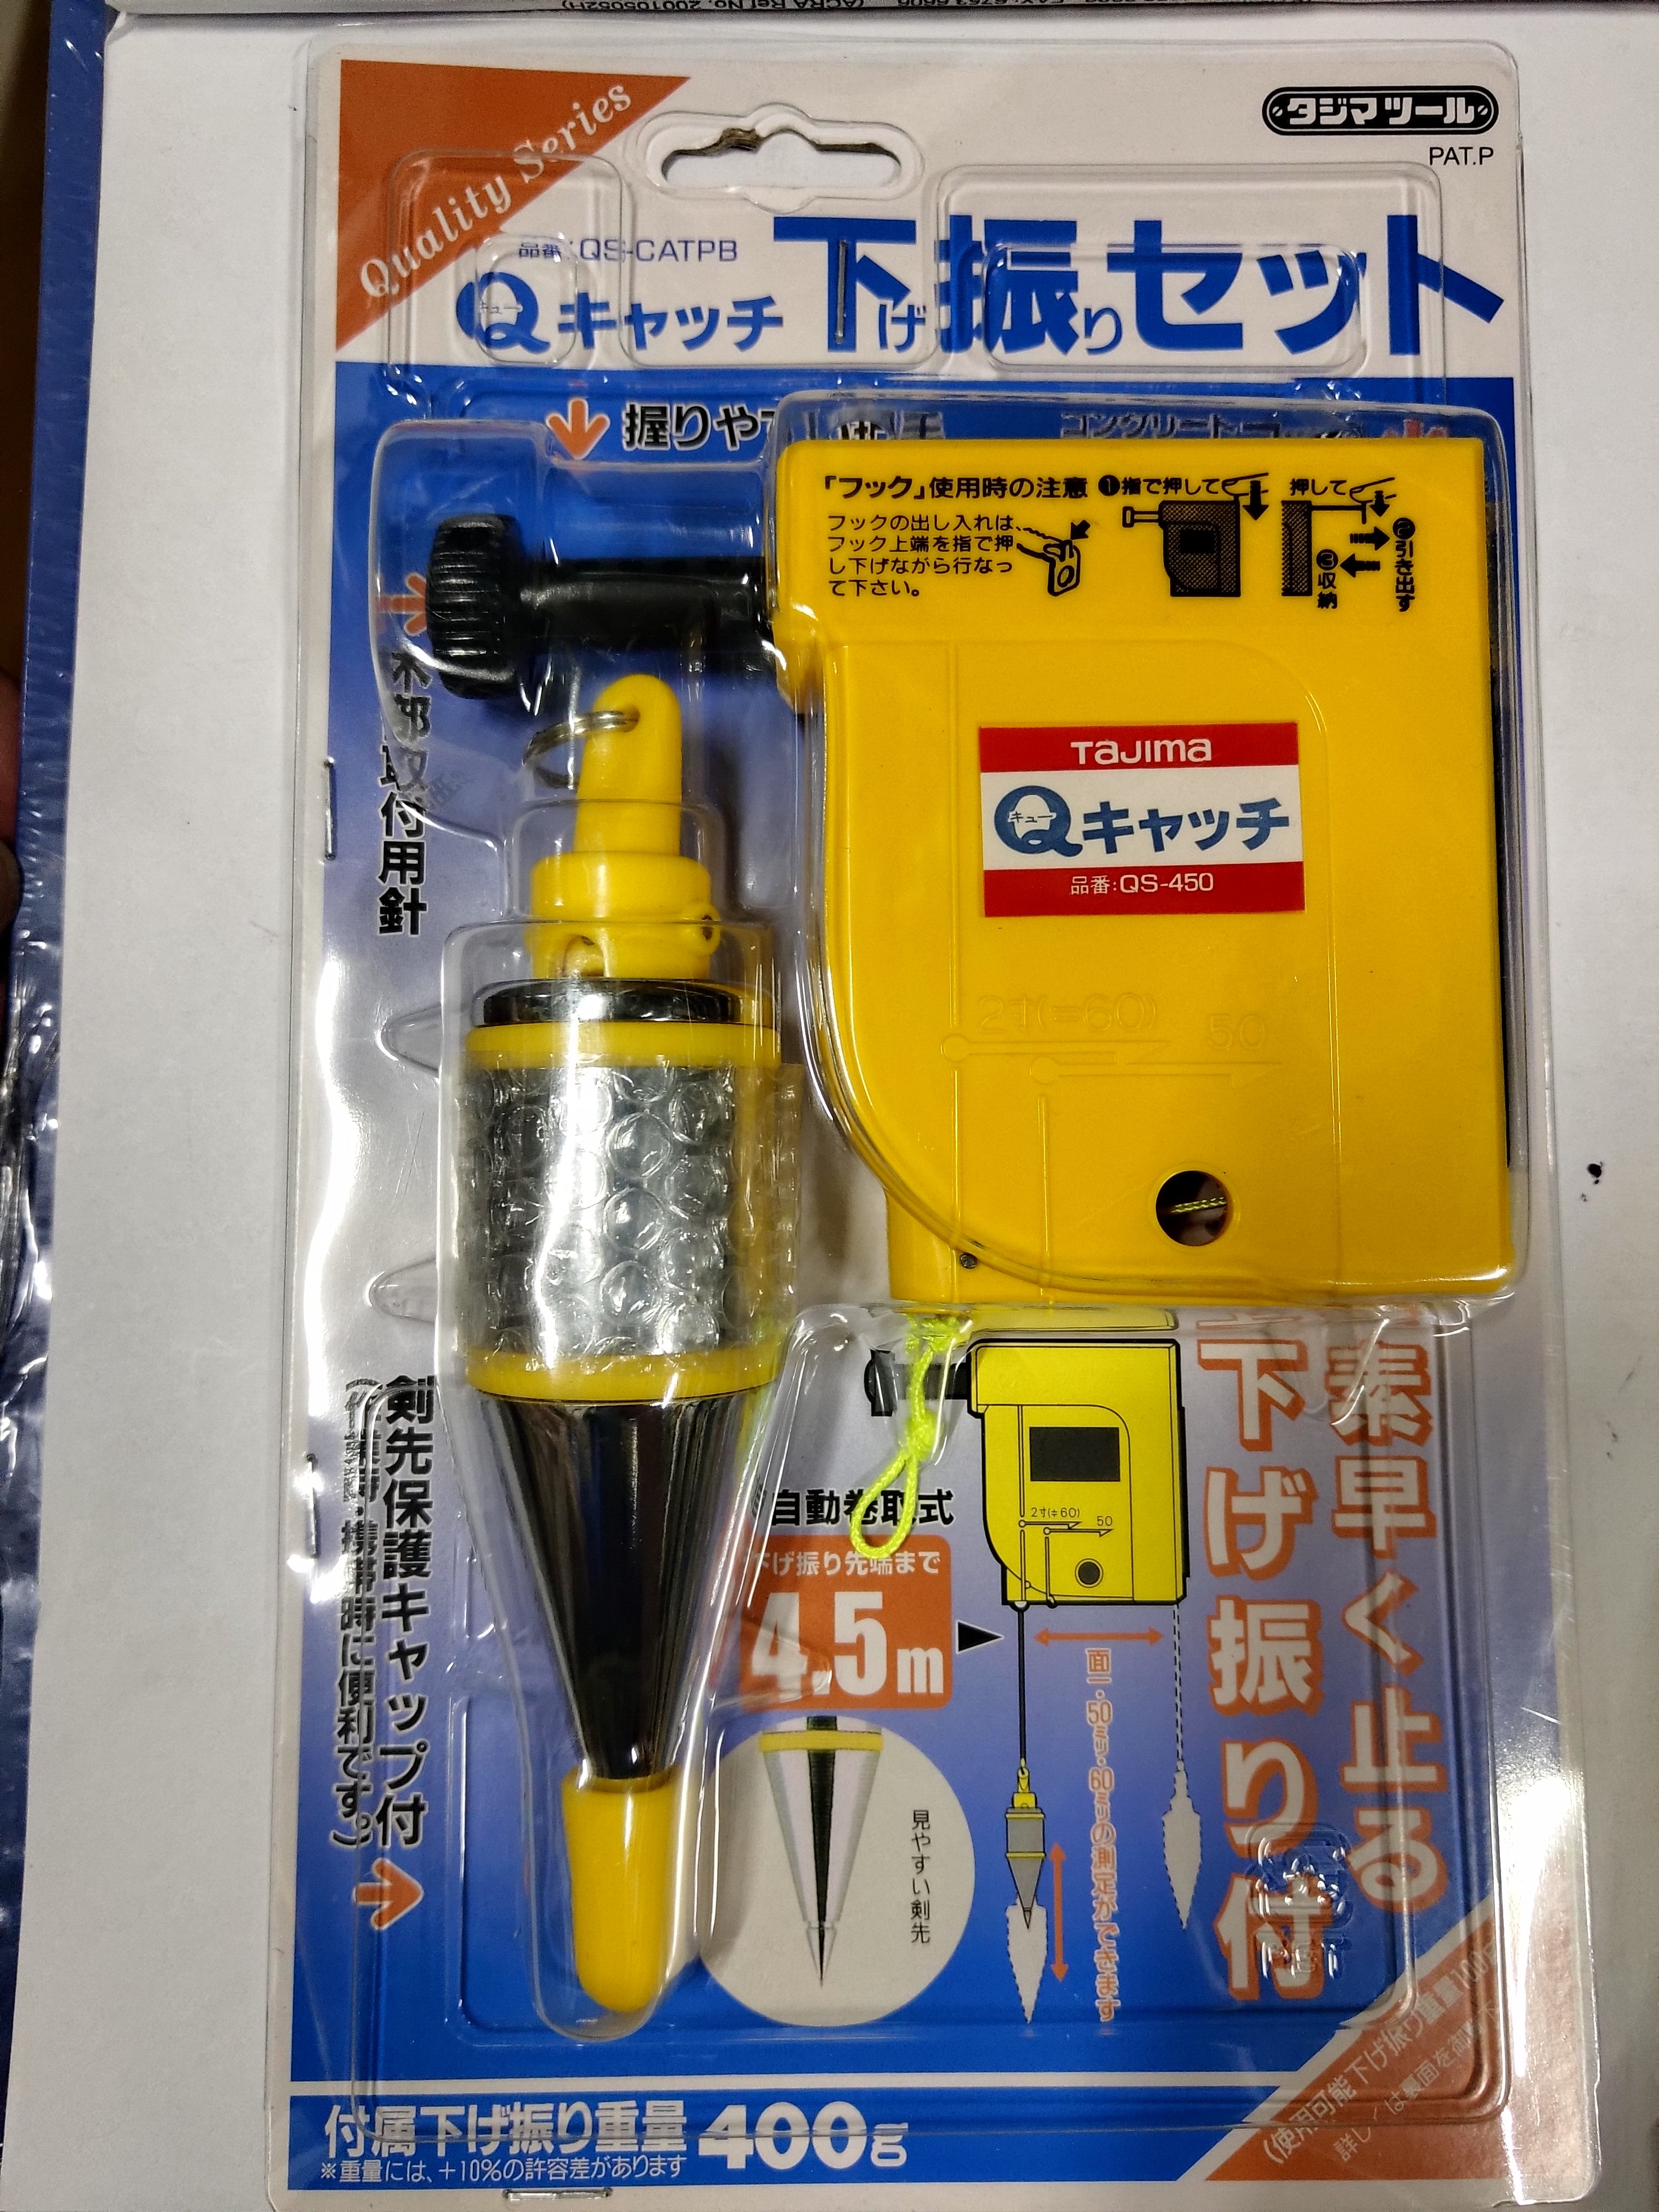 TAJIMA Yellow Bobstter QS-450 400G Model: 016-041-400